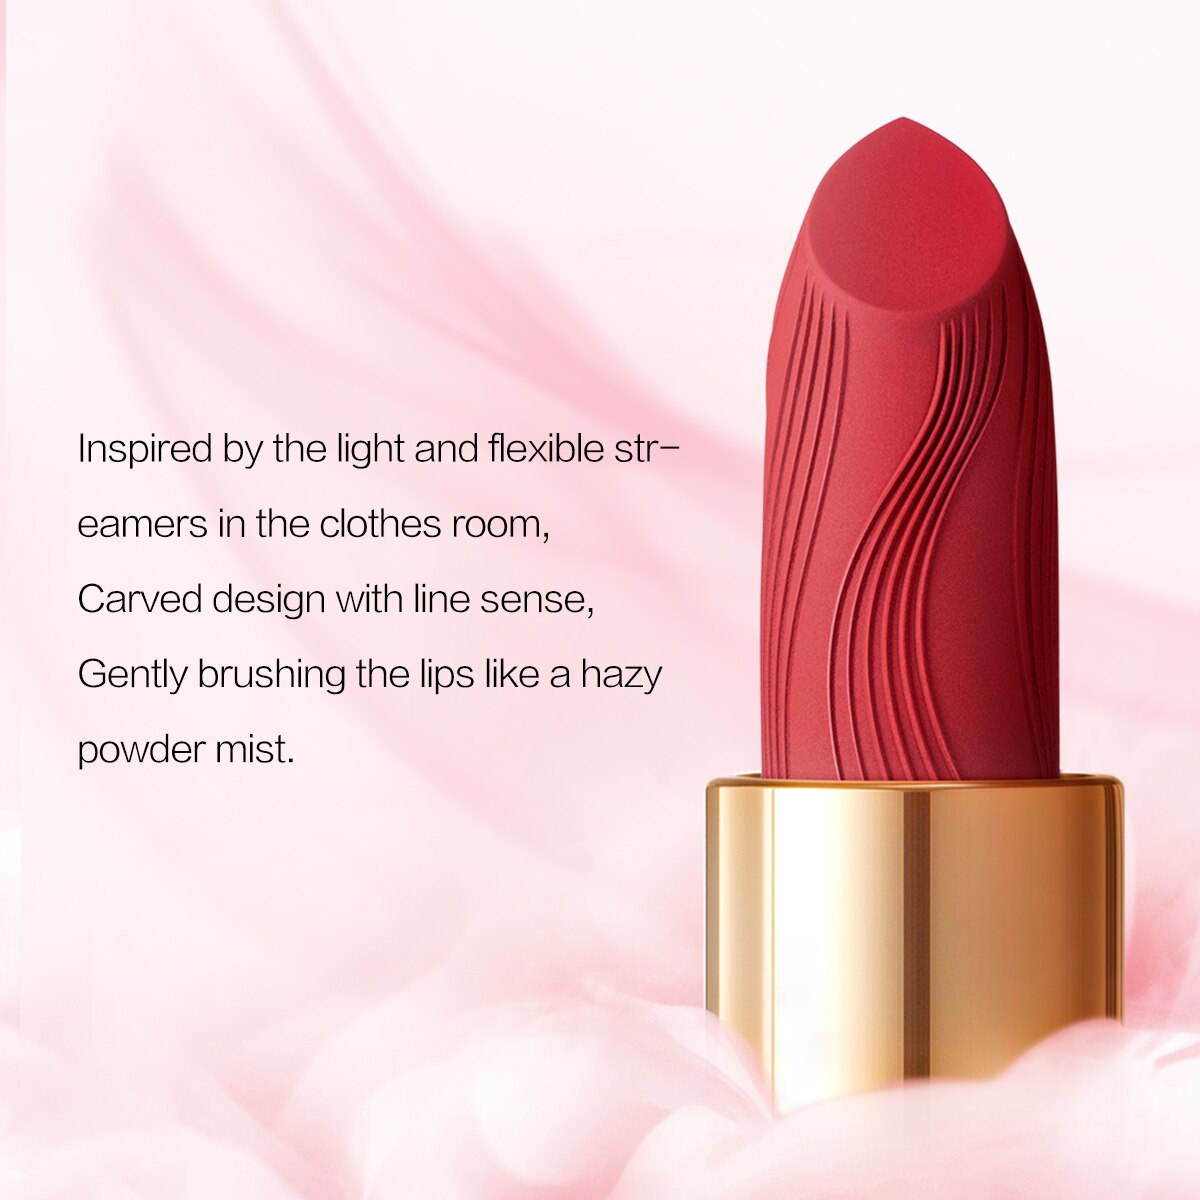 Pink Love Lipstick - Carslan